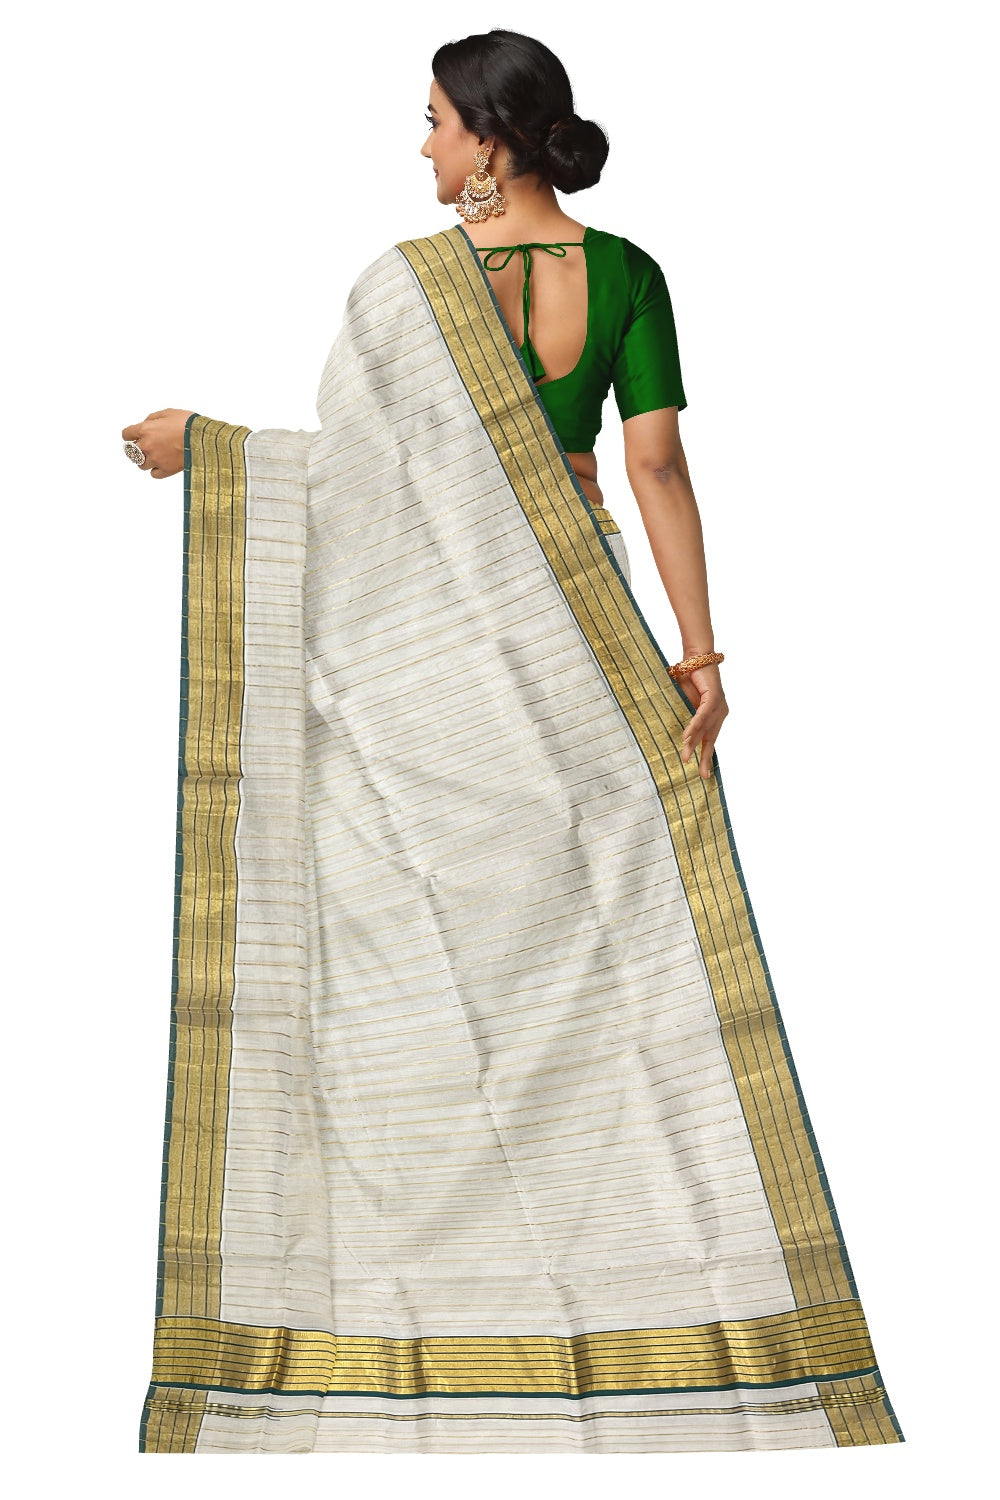 Southloom™ Original Handloom Cotton Saree with Green Border and Kasavu Lines Across Body